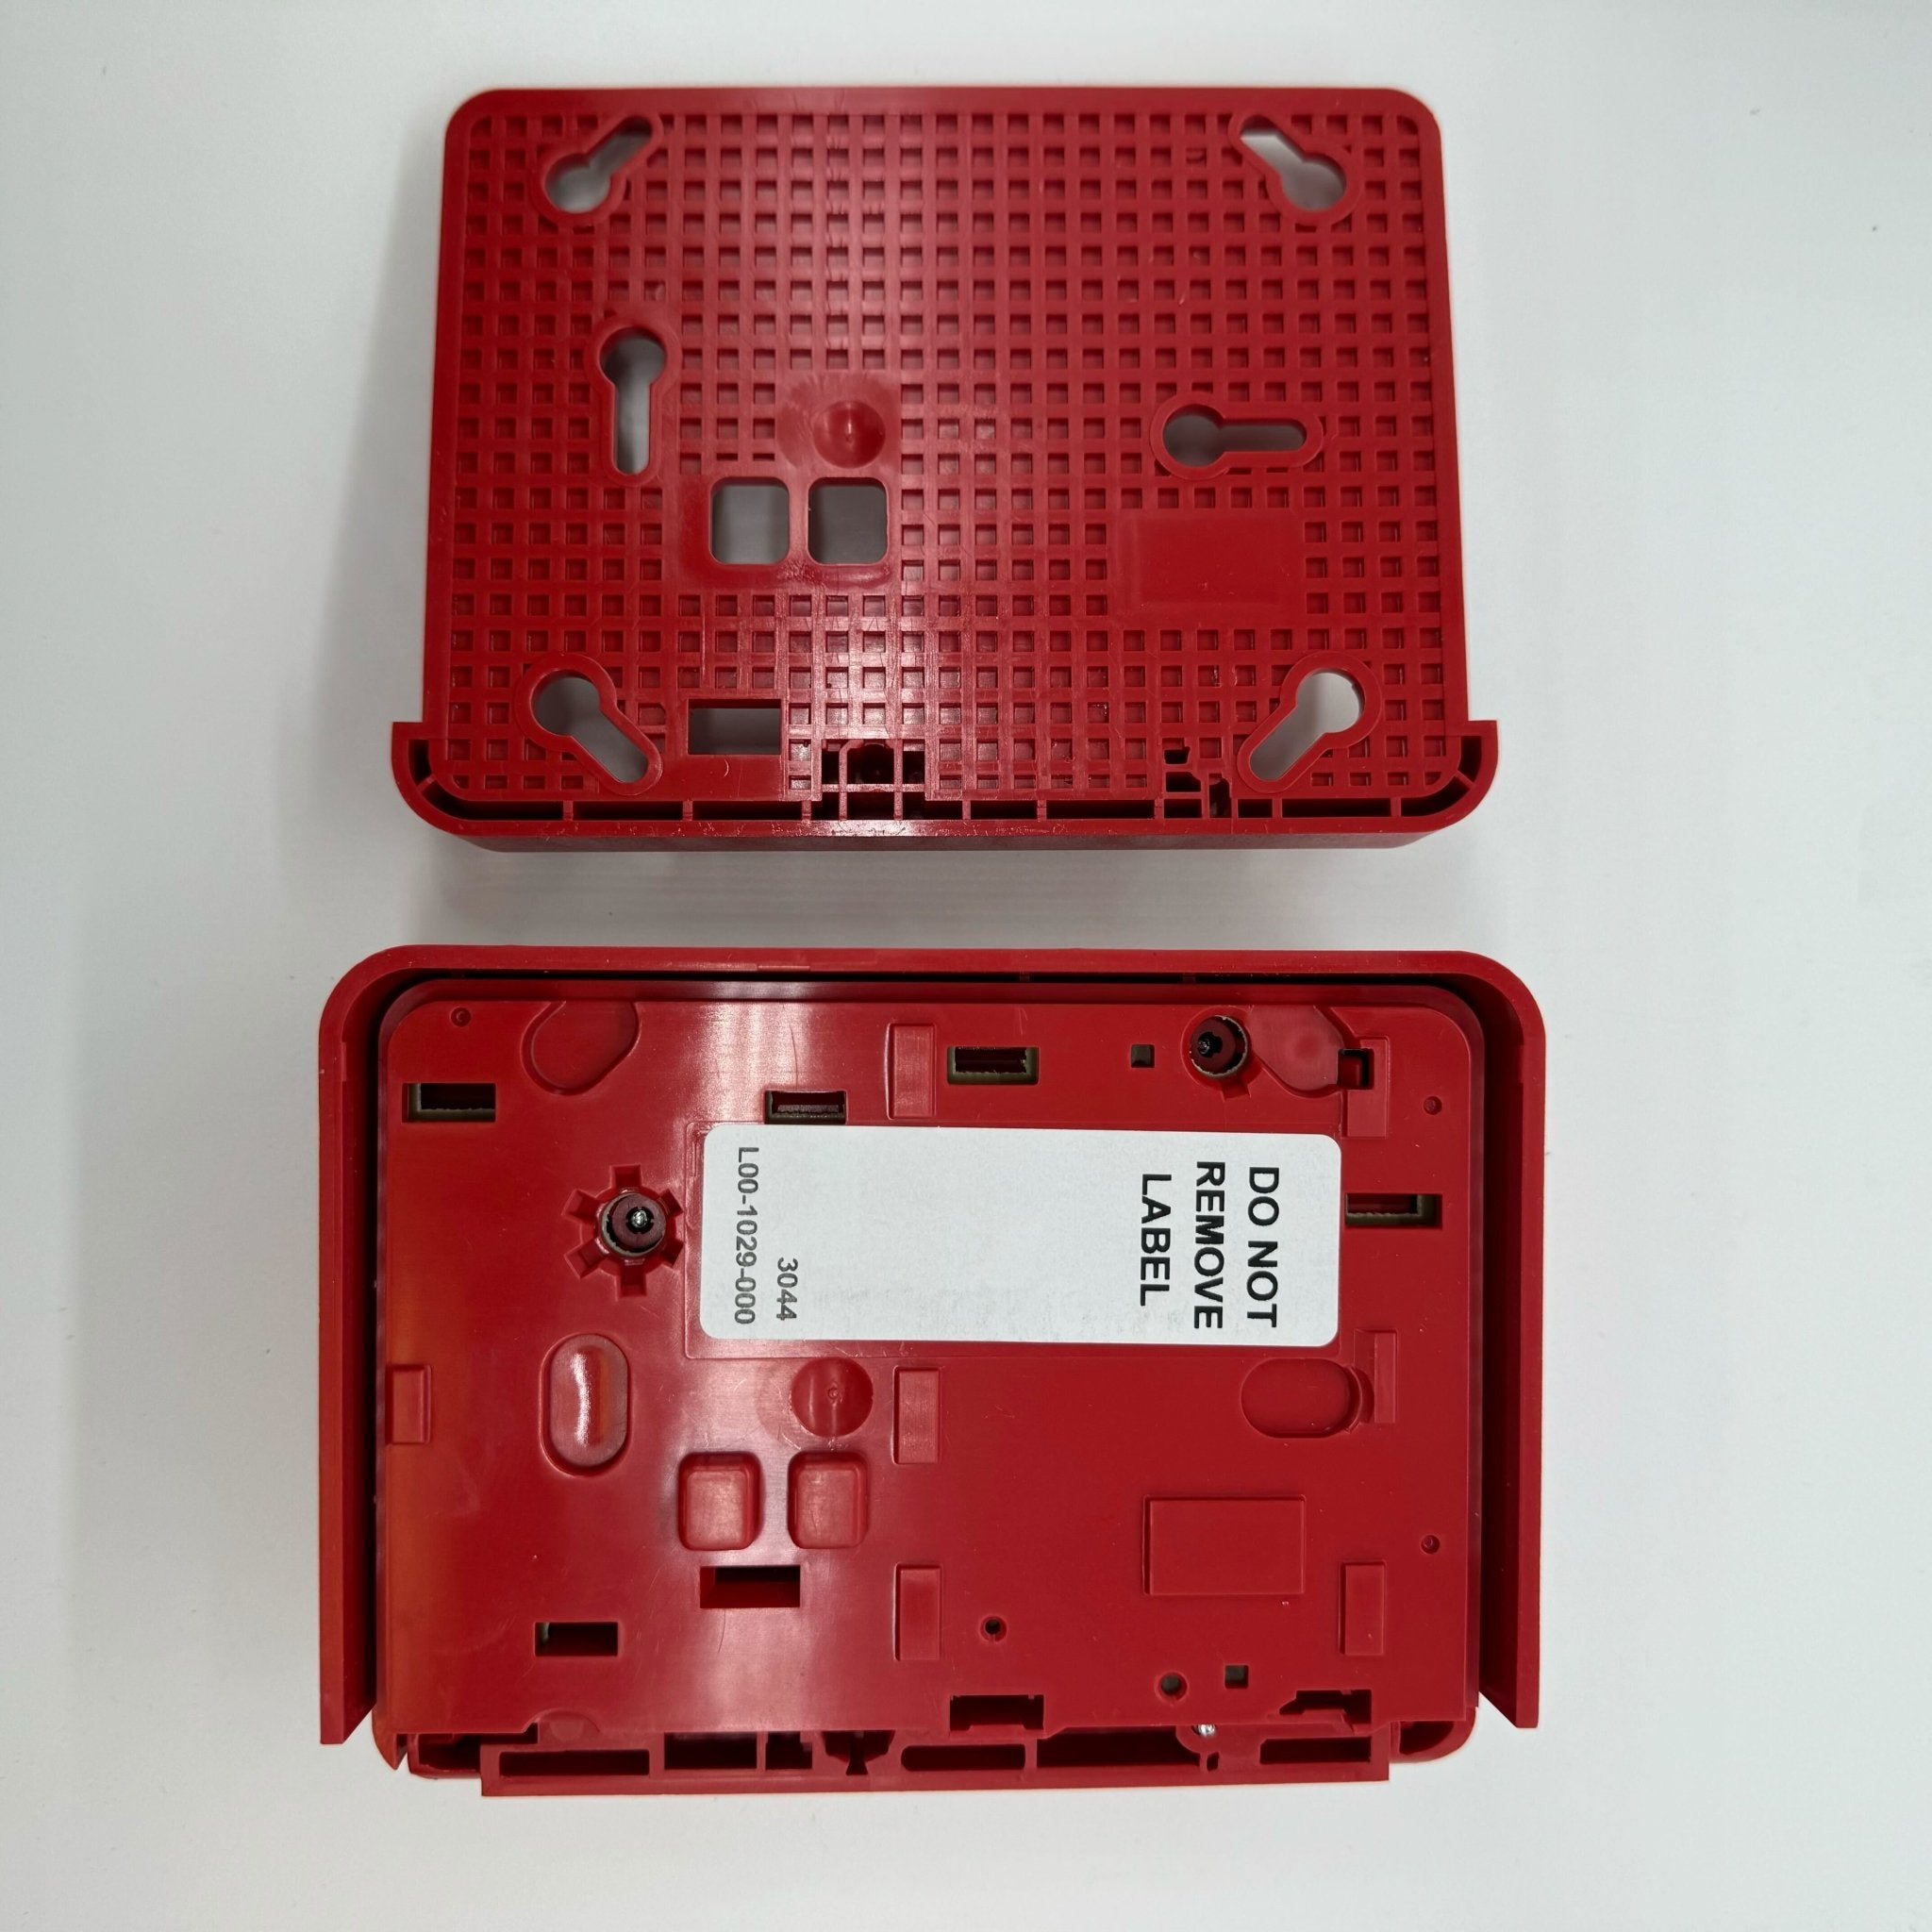 WIDP-PULL-DA - Farenhyt - The Fire Alarm Supplier